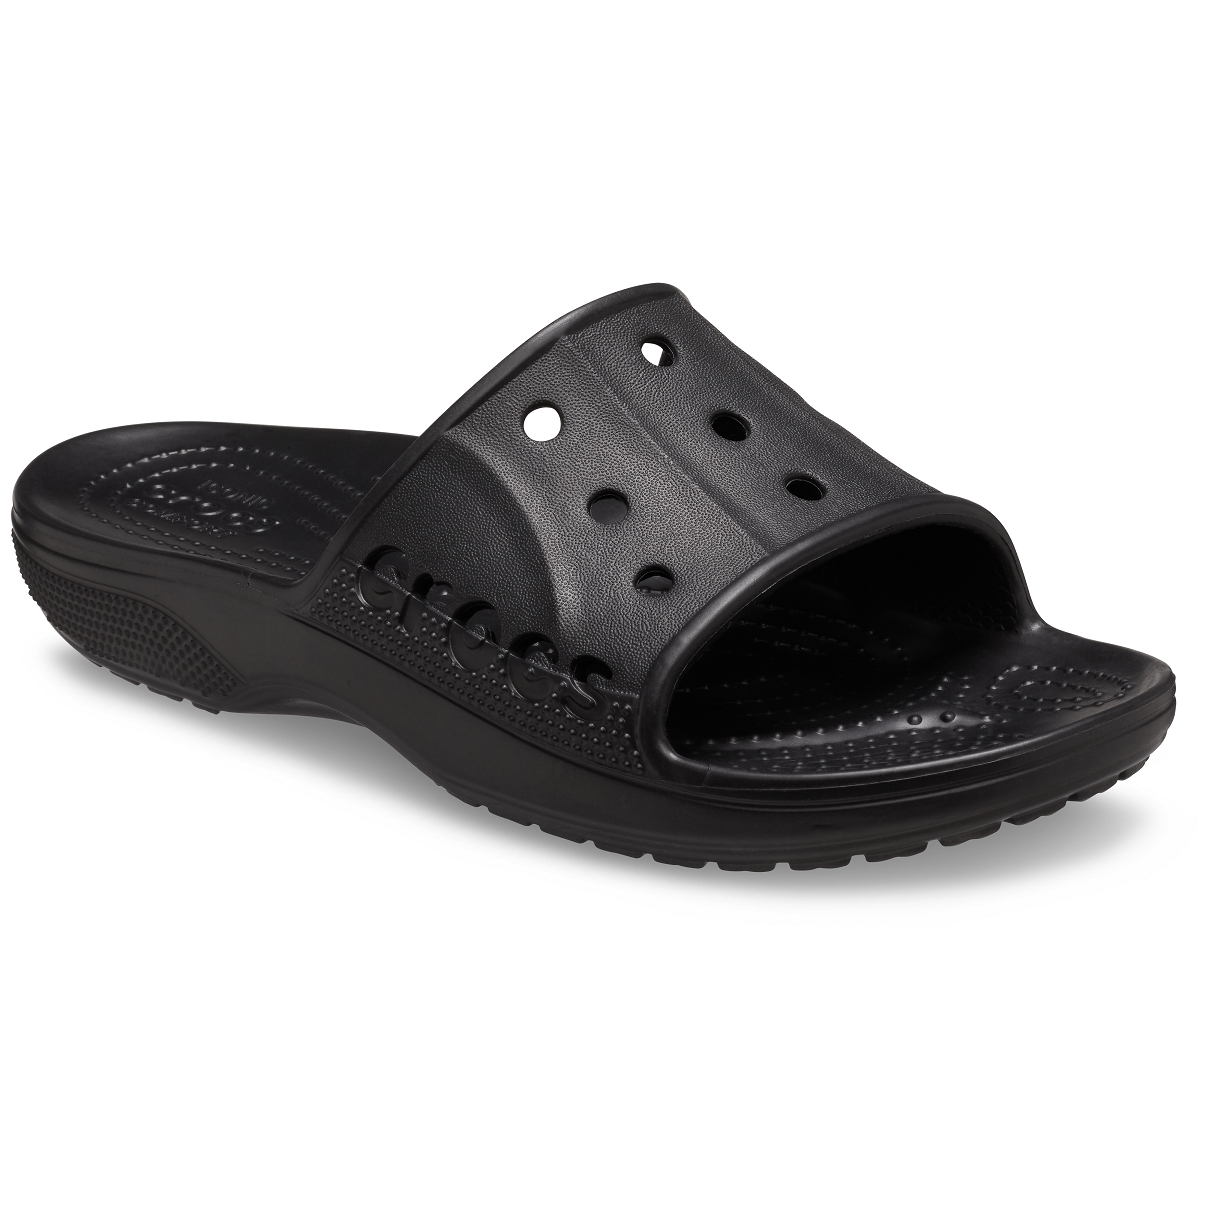 Pantofle Crocs Baya II Slide Velikost bot (EU): 36-37 / Barva: černá